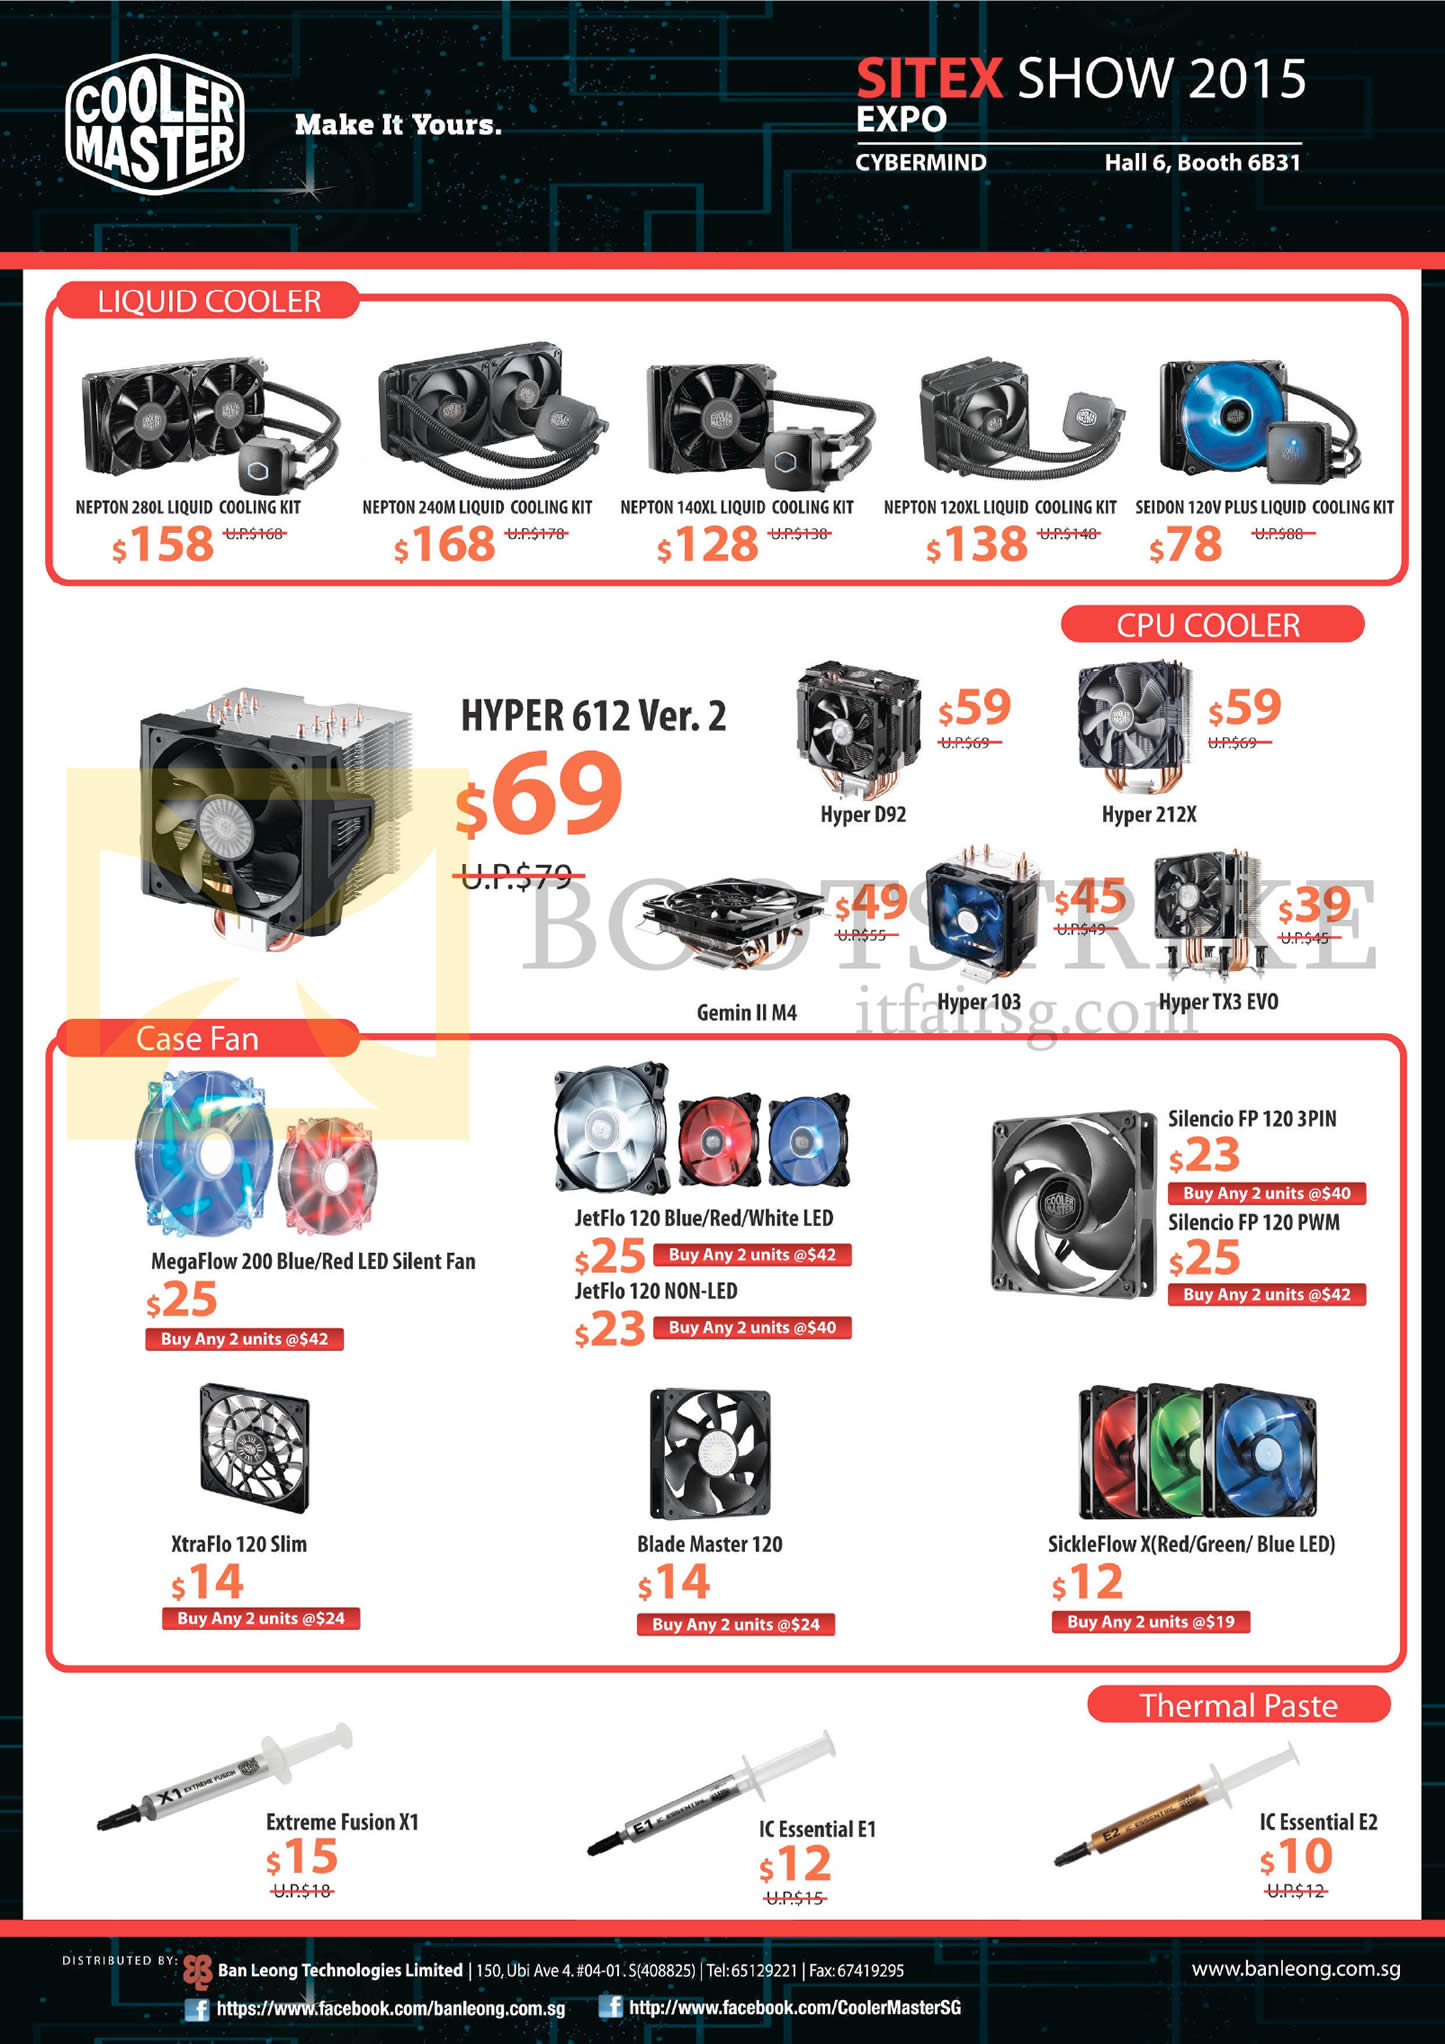 SITEX 2015 price list image brochure of Cooler Master Liquid Cooler, Case Fan, CPU Cooler, Nepton 280L, 240M, 140XL, 120XL, 120V Plus Liquid Cooling Kit, Hyper 612 Ver.2, Megaflow 20, Jetflo 120, Silencio FP120, Megaflow 200, Jetflo 120